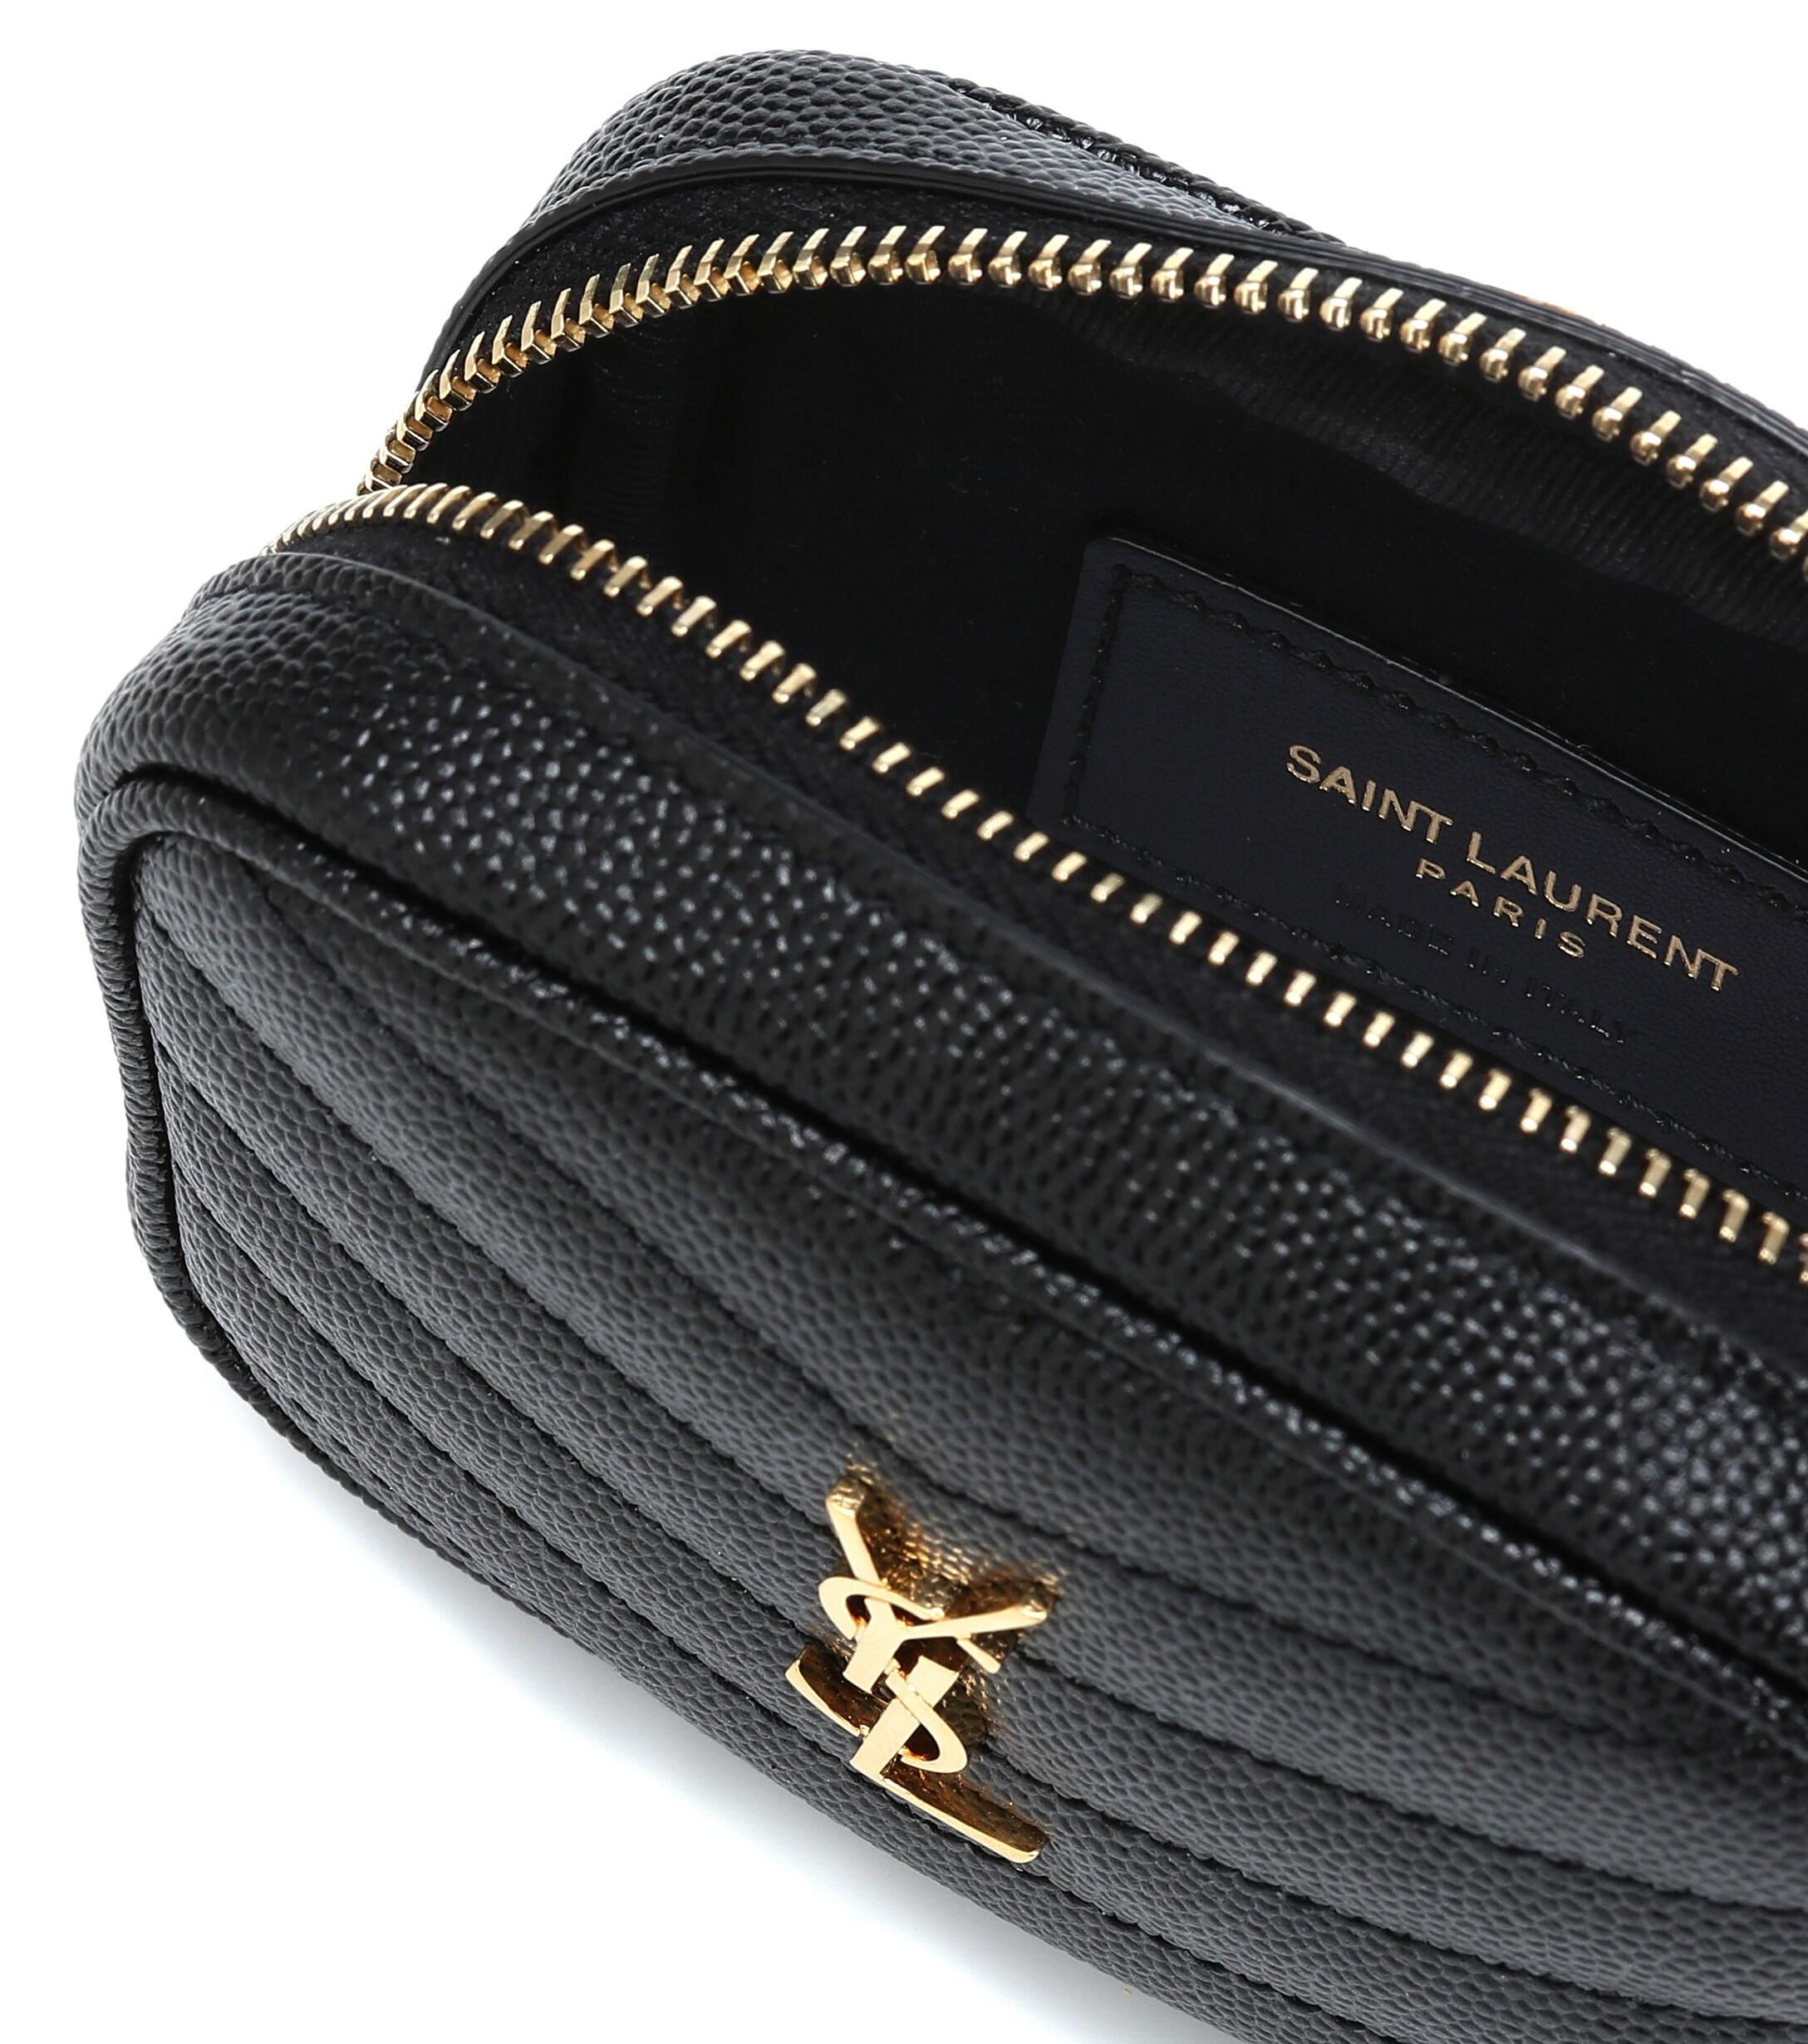 Lou Mini leather crossbody bag black #Sponsored #leather, #Mini